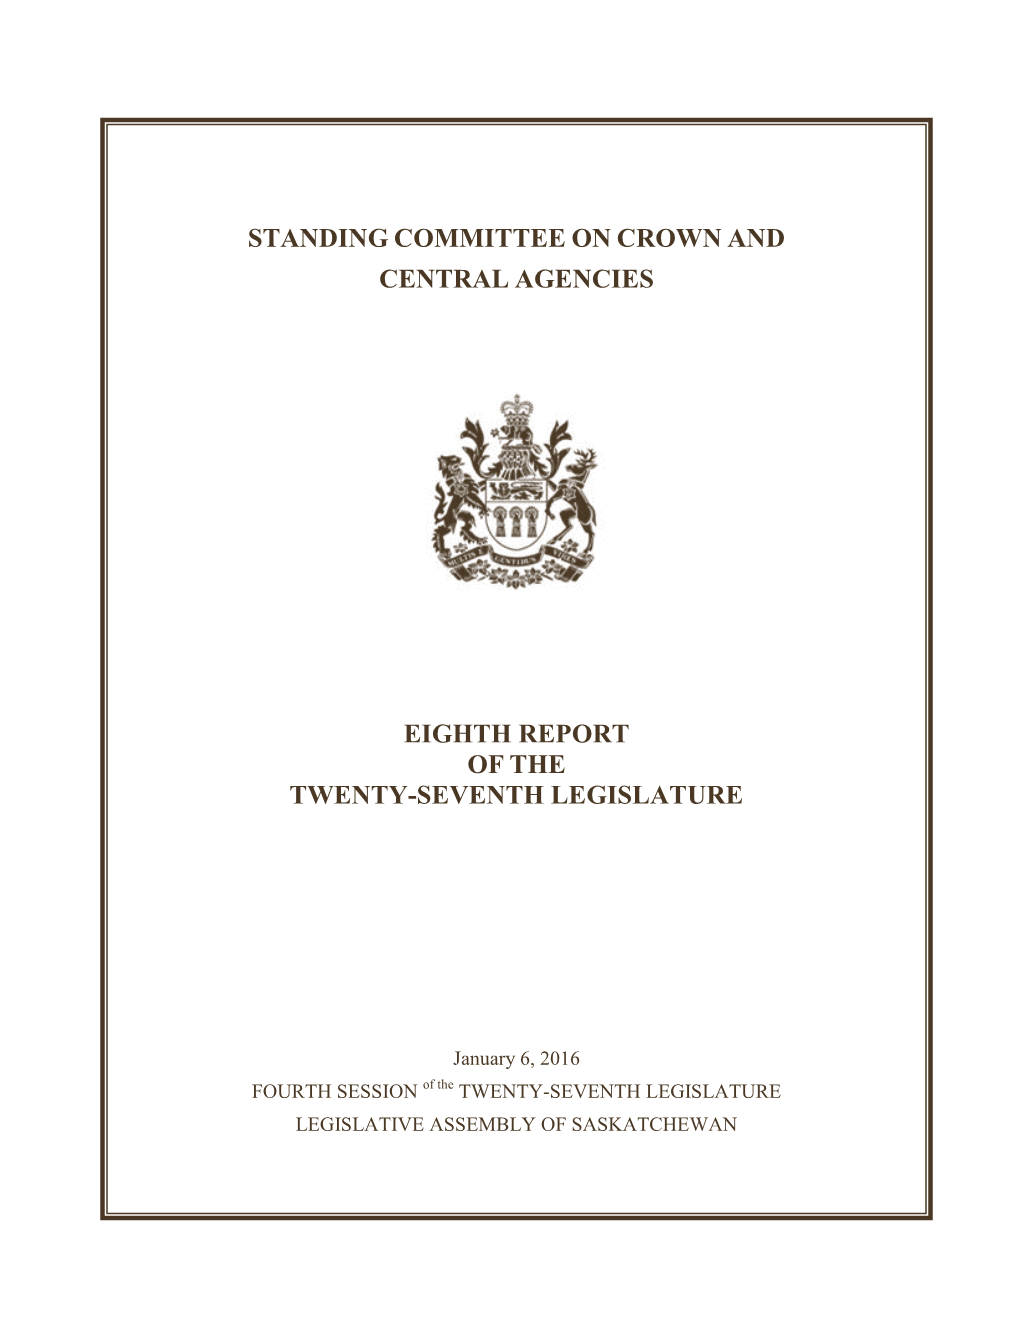 Report of the Twenty-Seventh Legislature